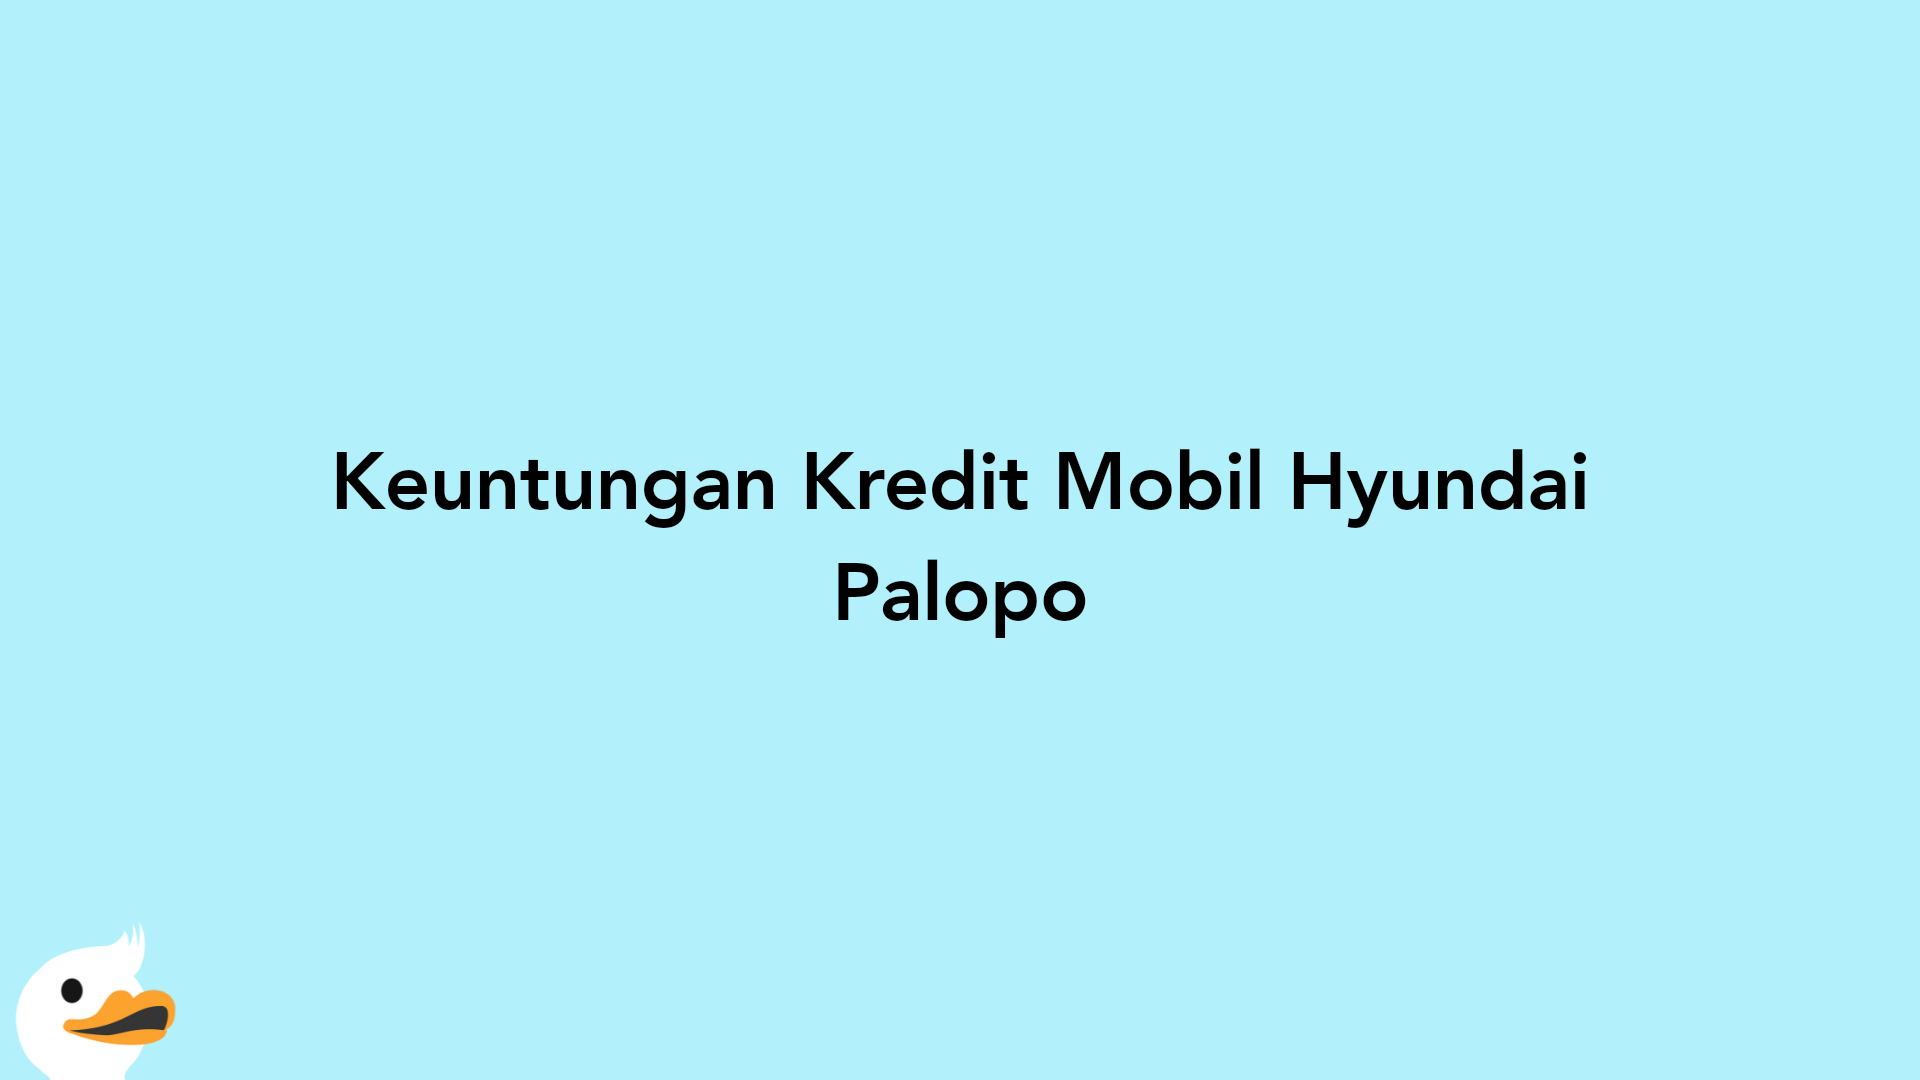 Keuntungan Kredit Mobil Hyundai Palopo